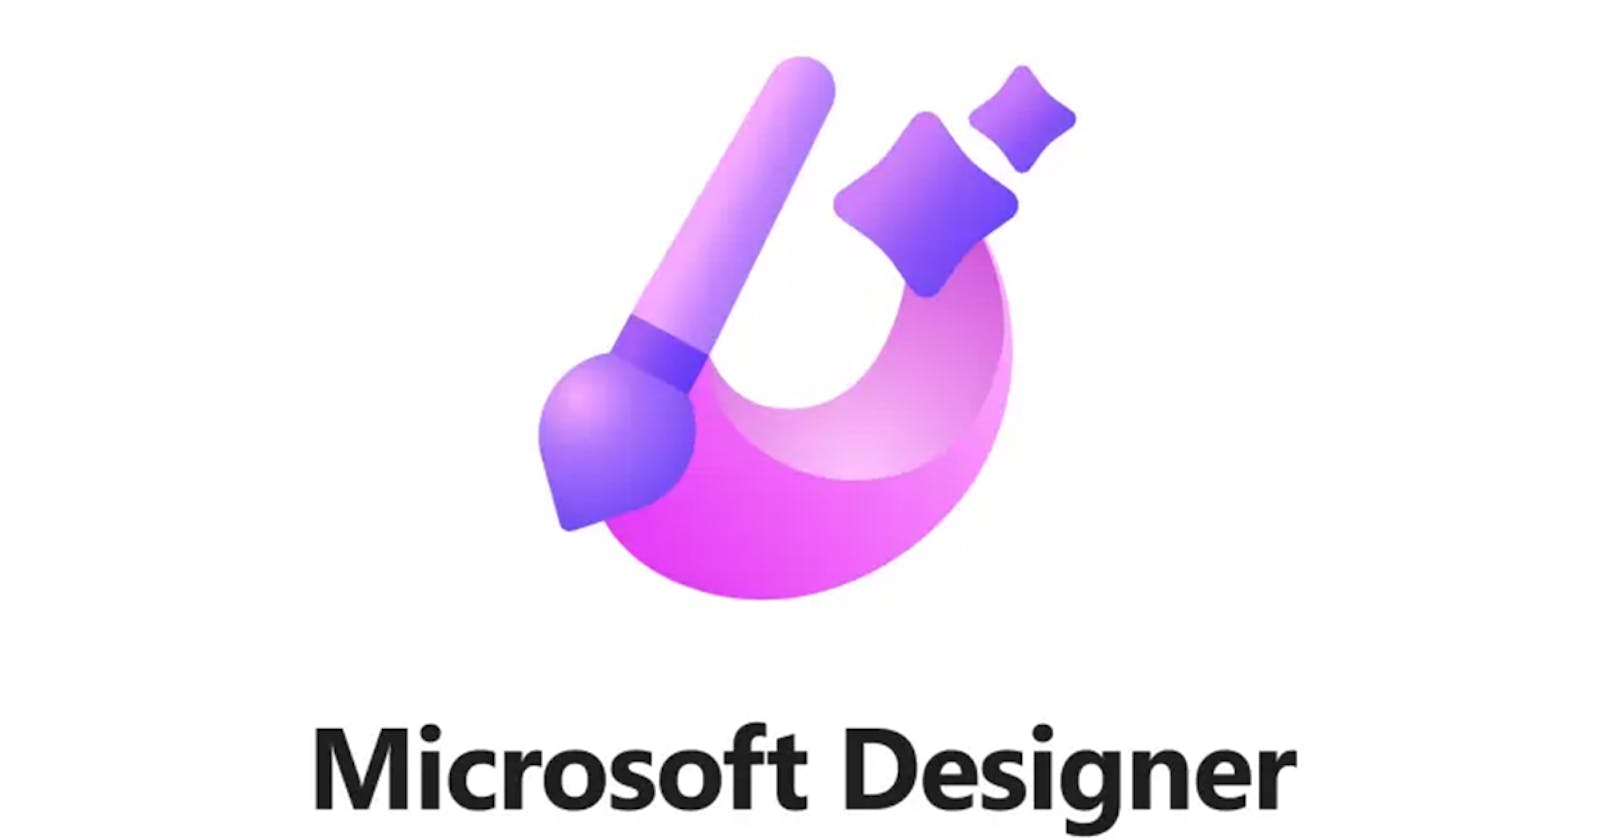 Microsoft Designer, the AI Image Tool